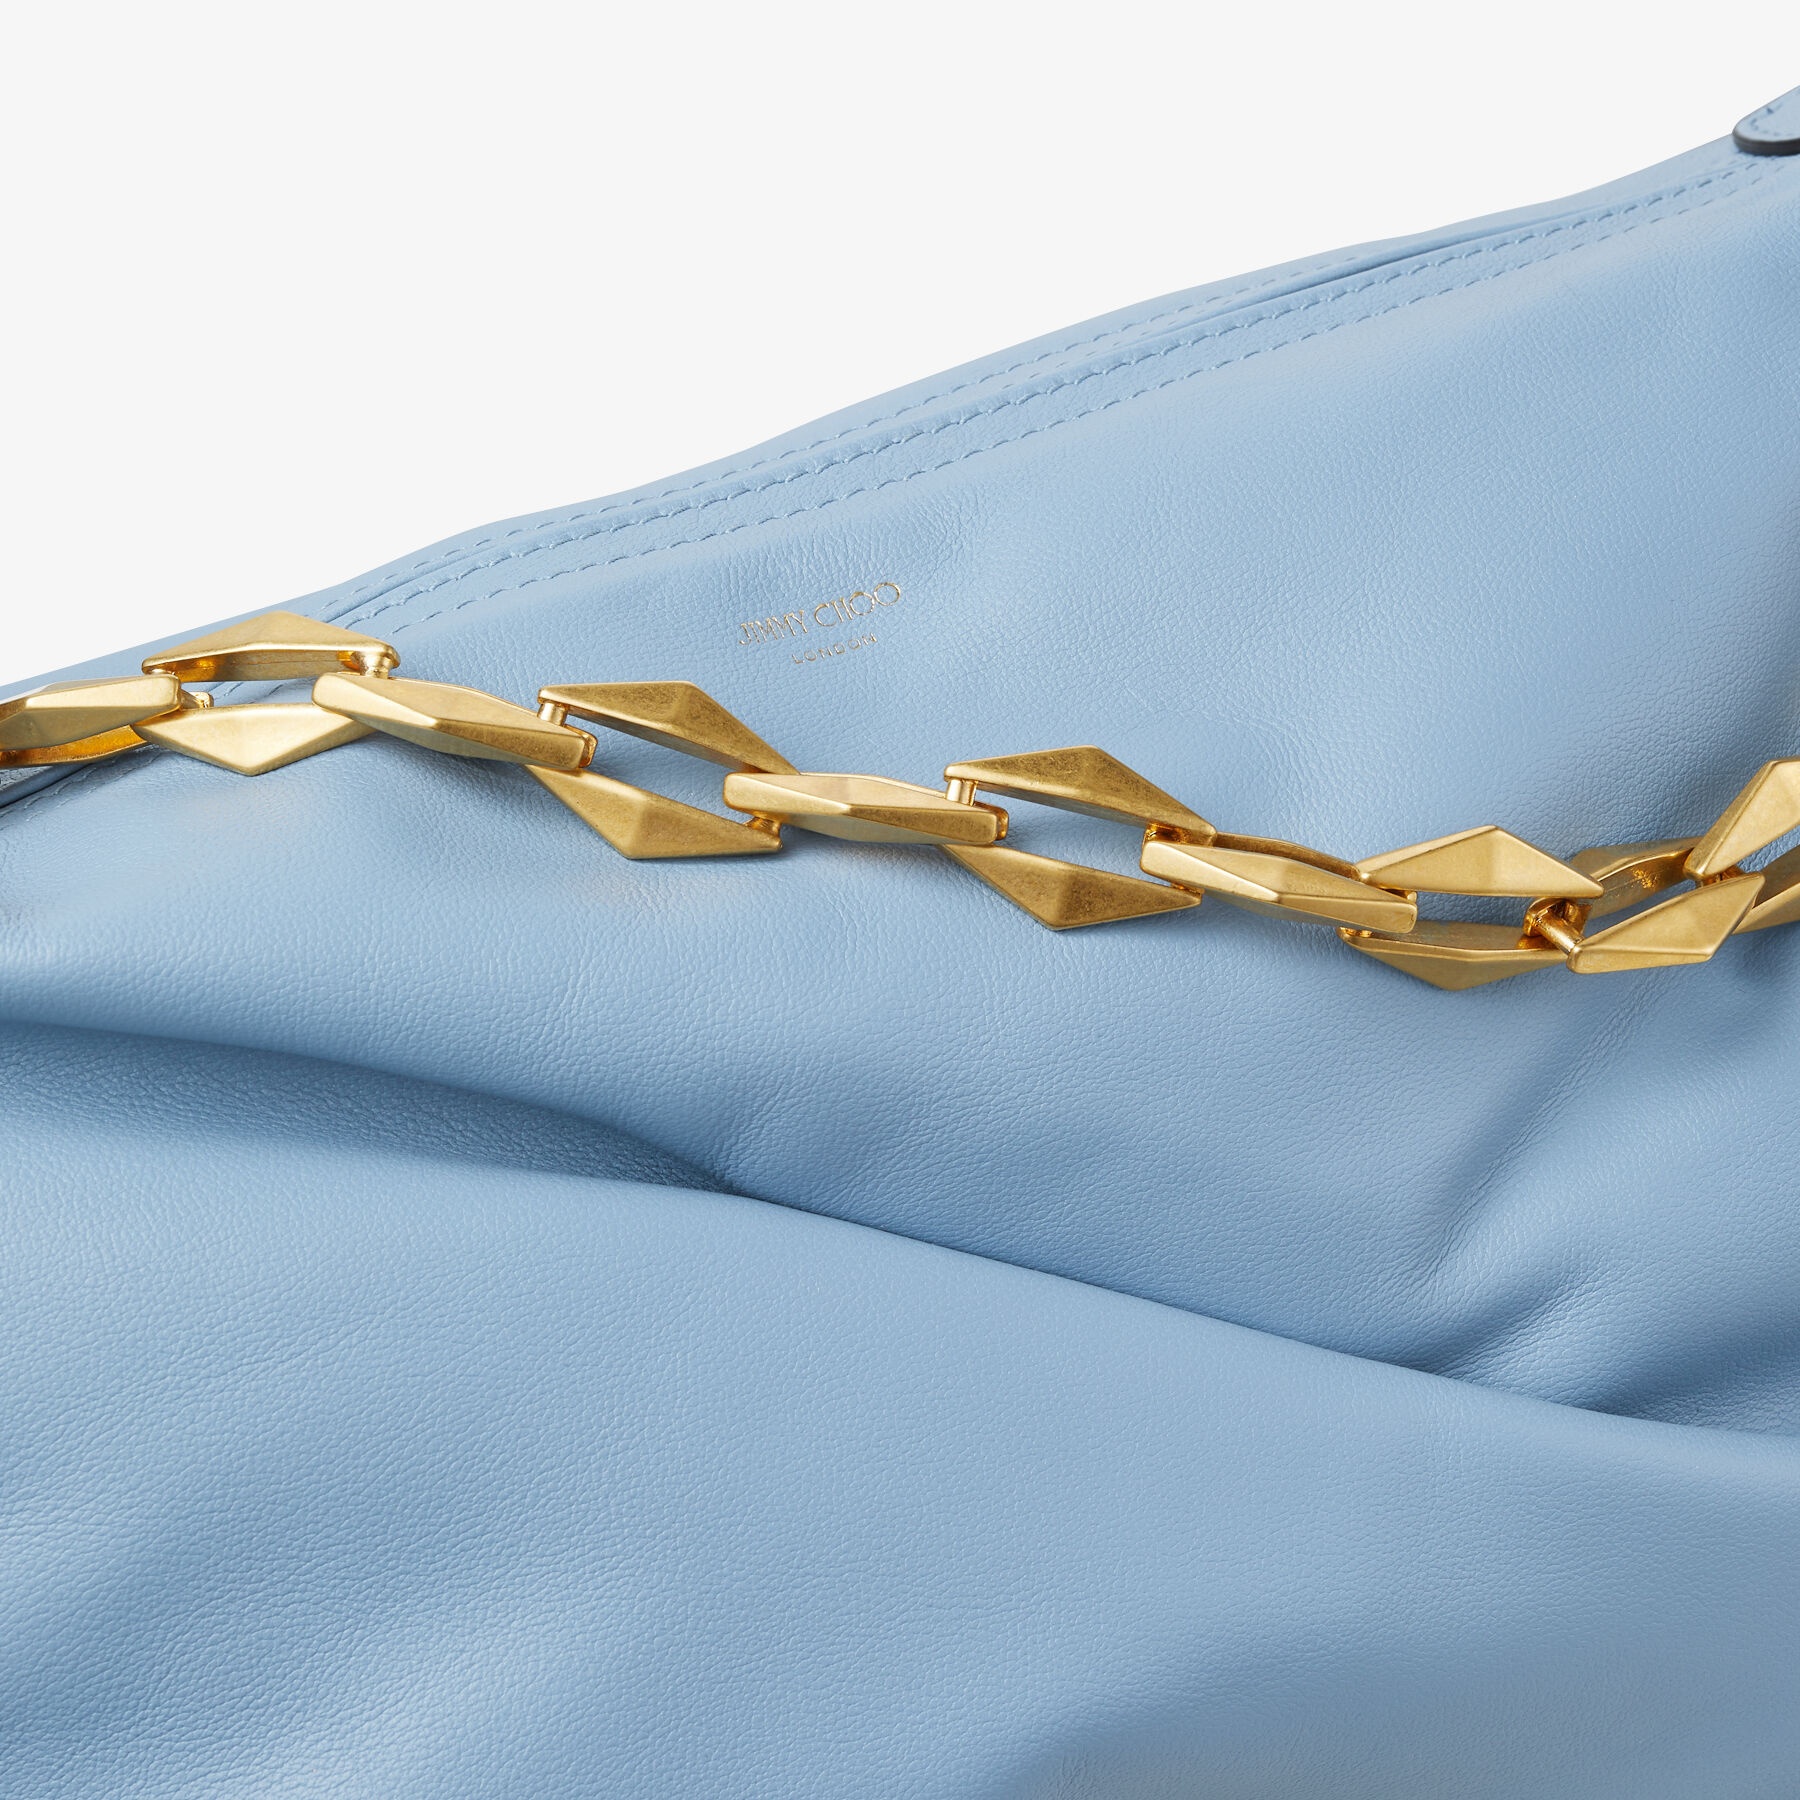 Diamond Soft Hobo S
Smoky Blue Soft Calf Leather Hobo Bag with Chain Strap - 8